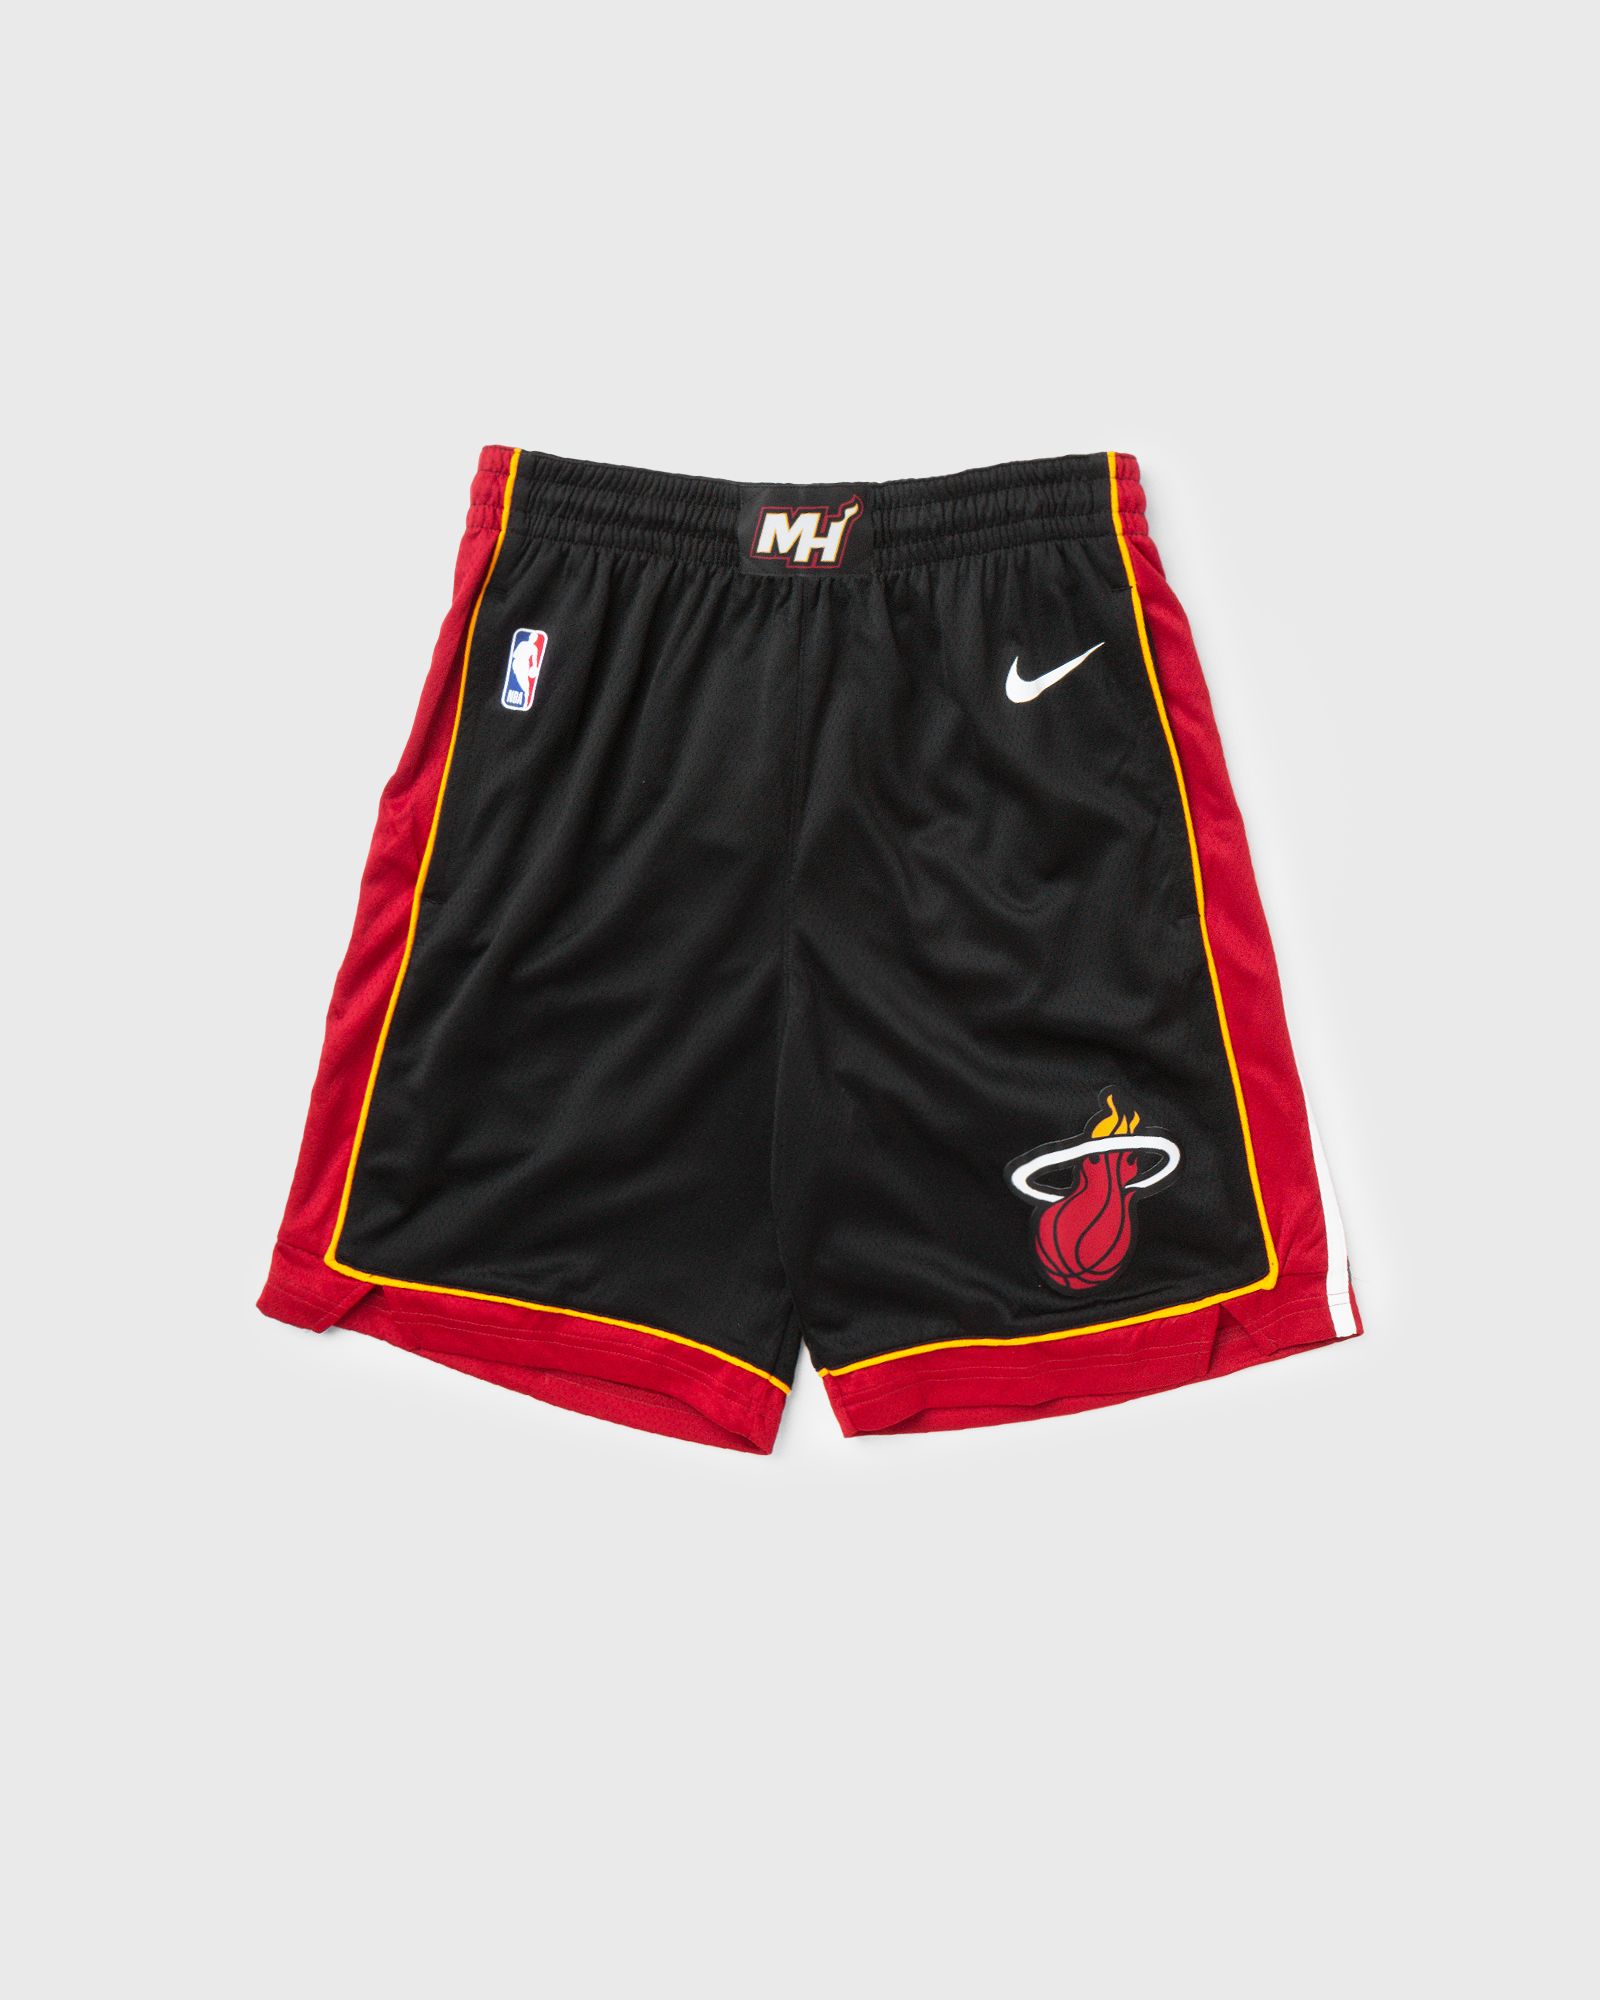 Nike - miami heat icon edition nba swingman shorts men sport & team shorts black in größe:xxl